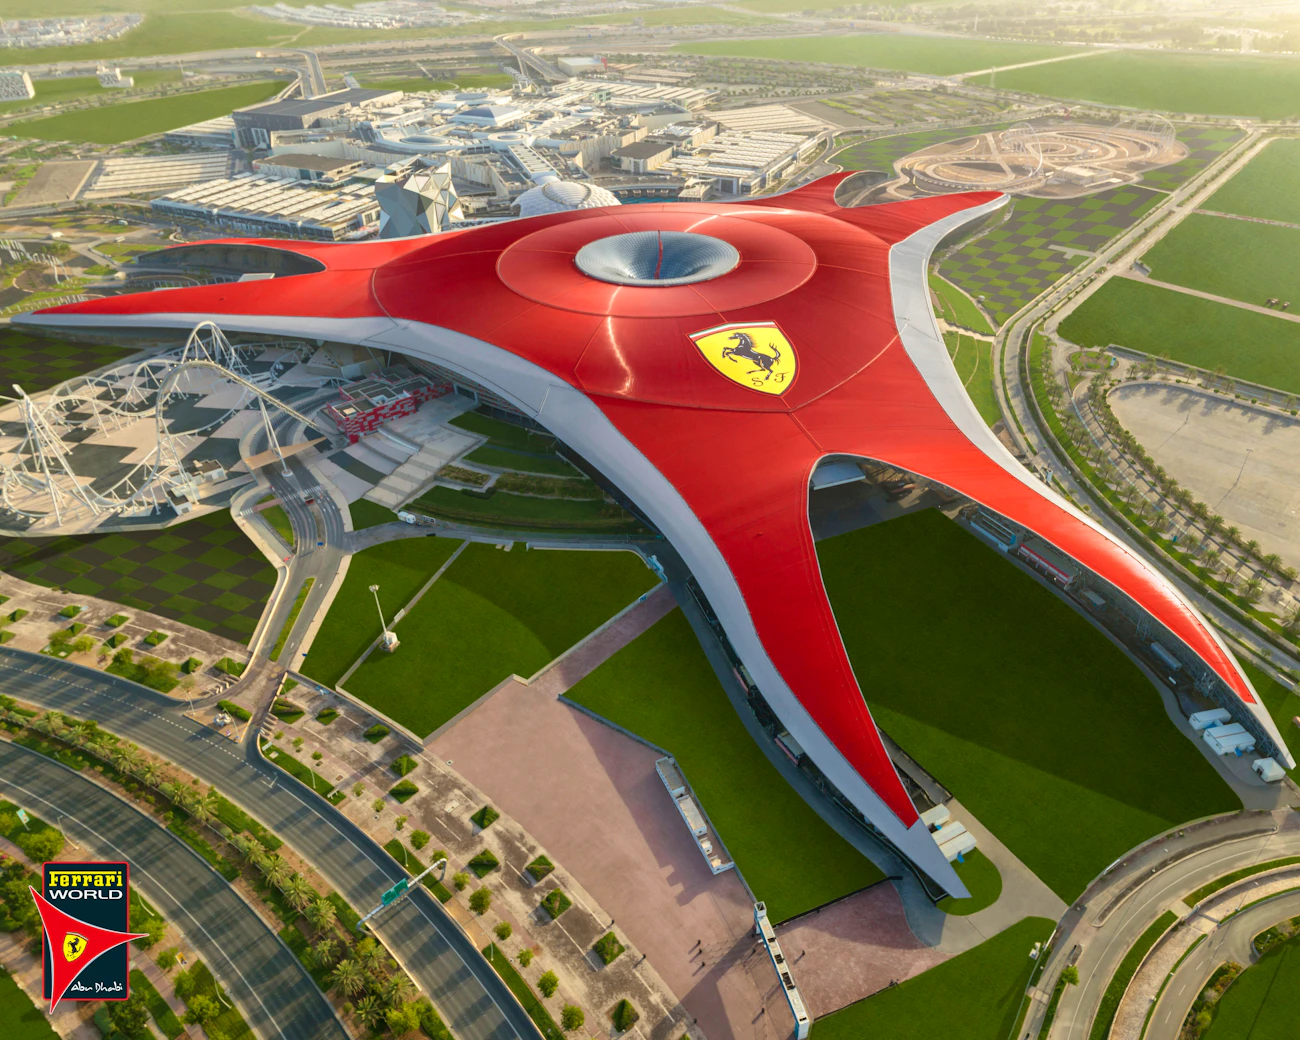 Ferrari World, Yas Waterworld, Warner Bros. World Abu Dhabi (3 Days Pass) Category